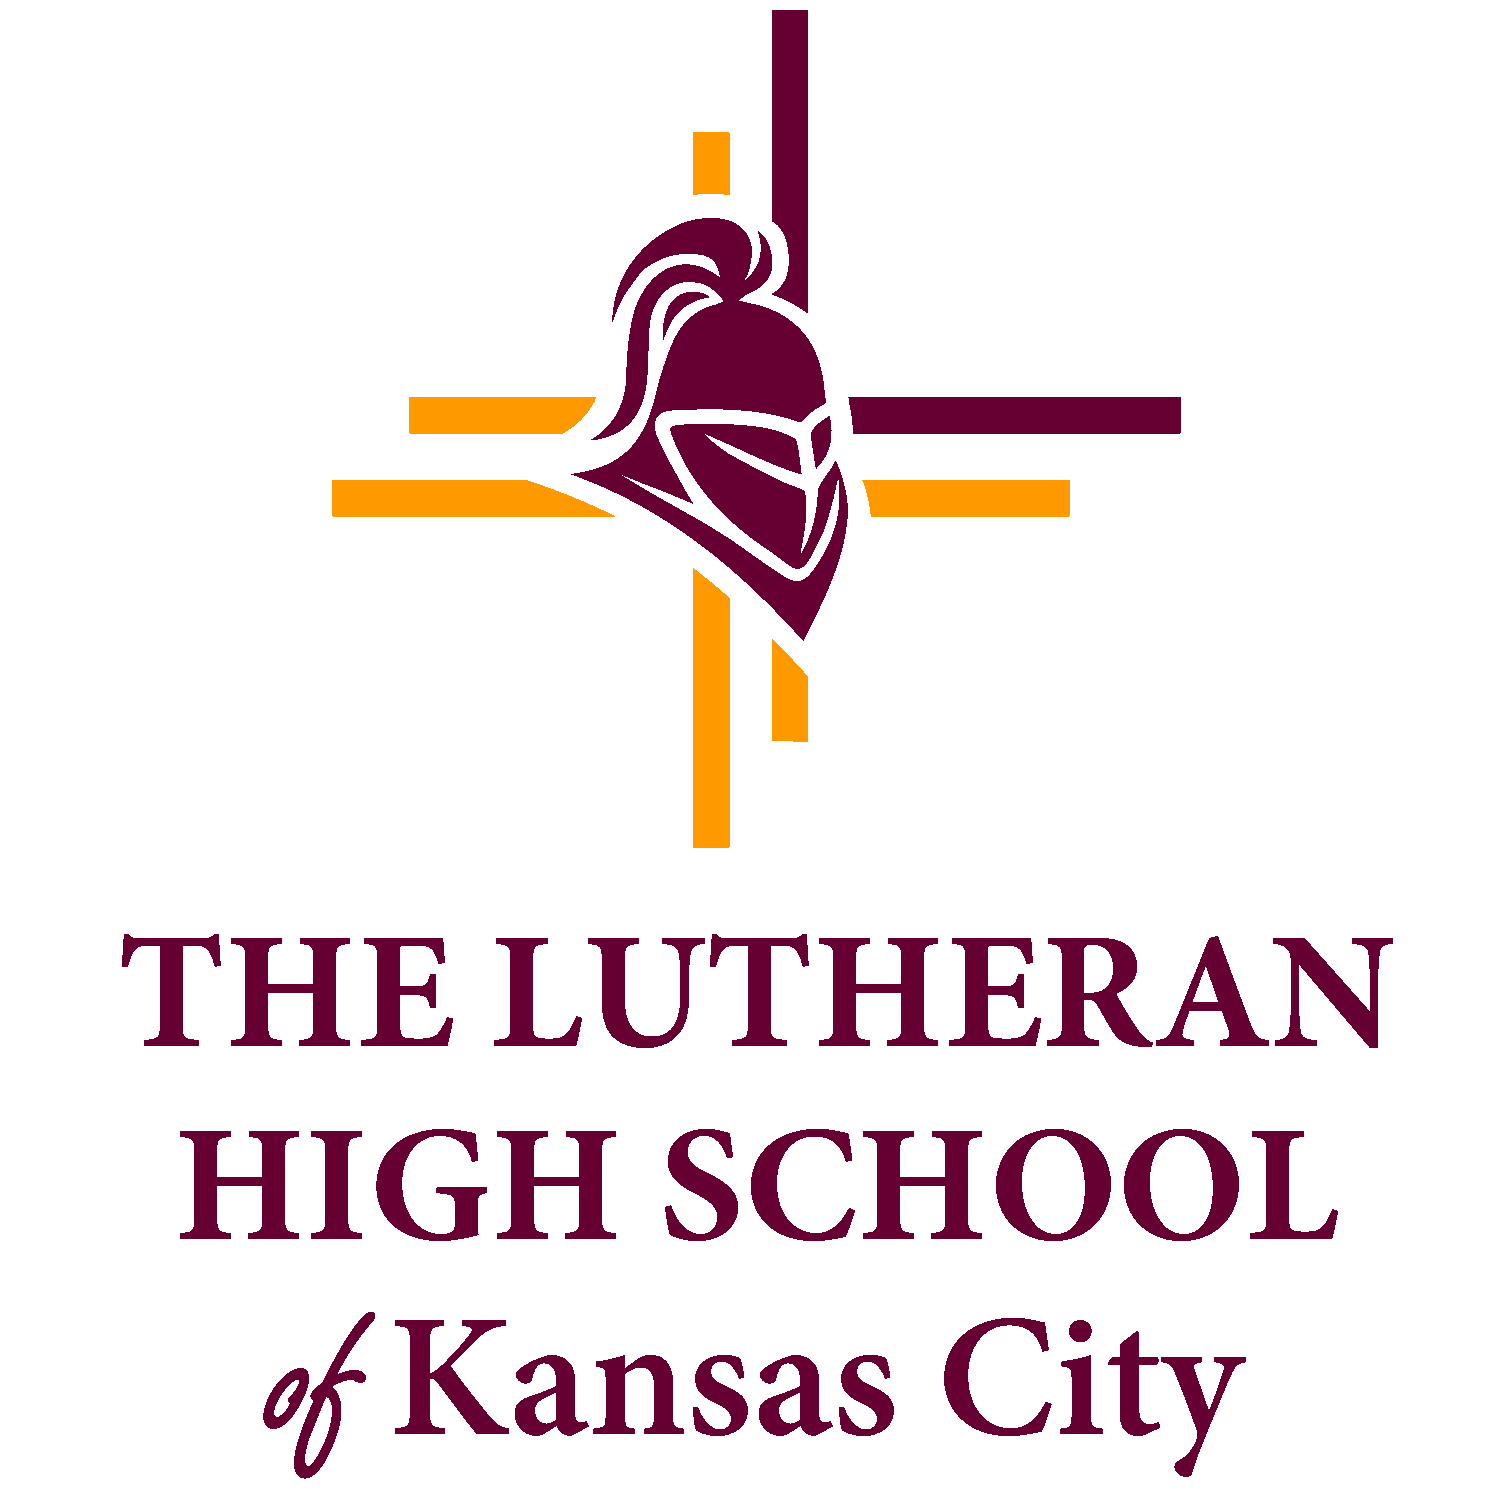 The Lutheran High School of Kansas City